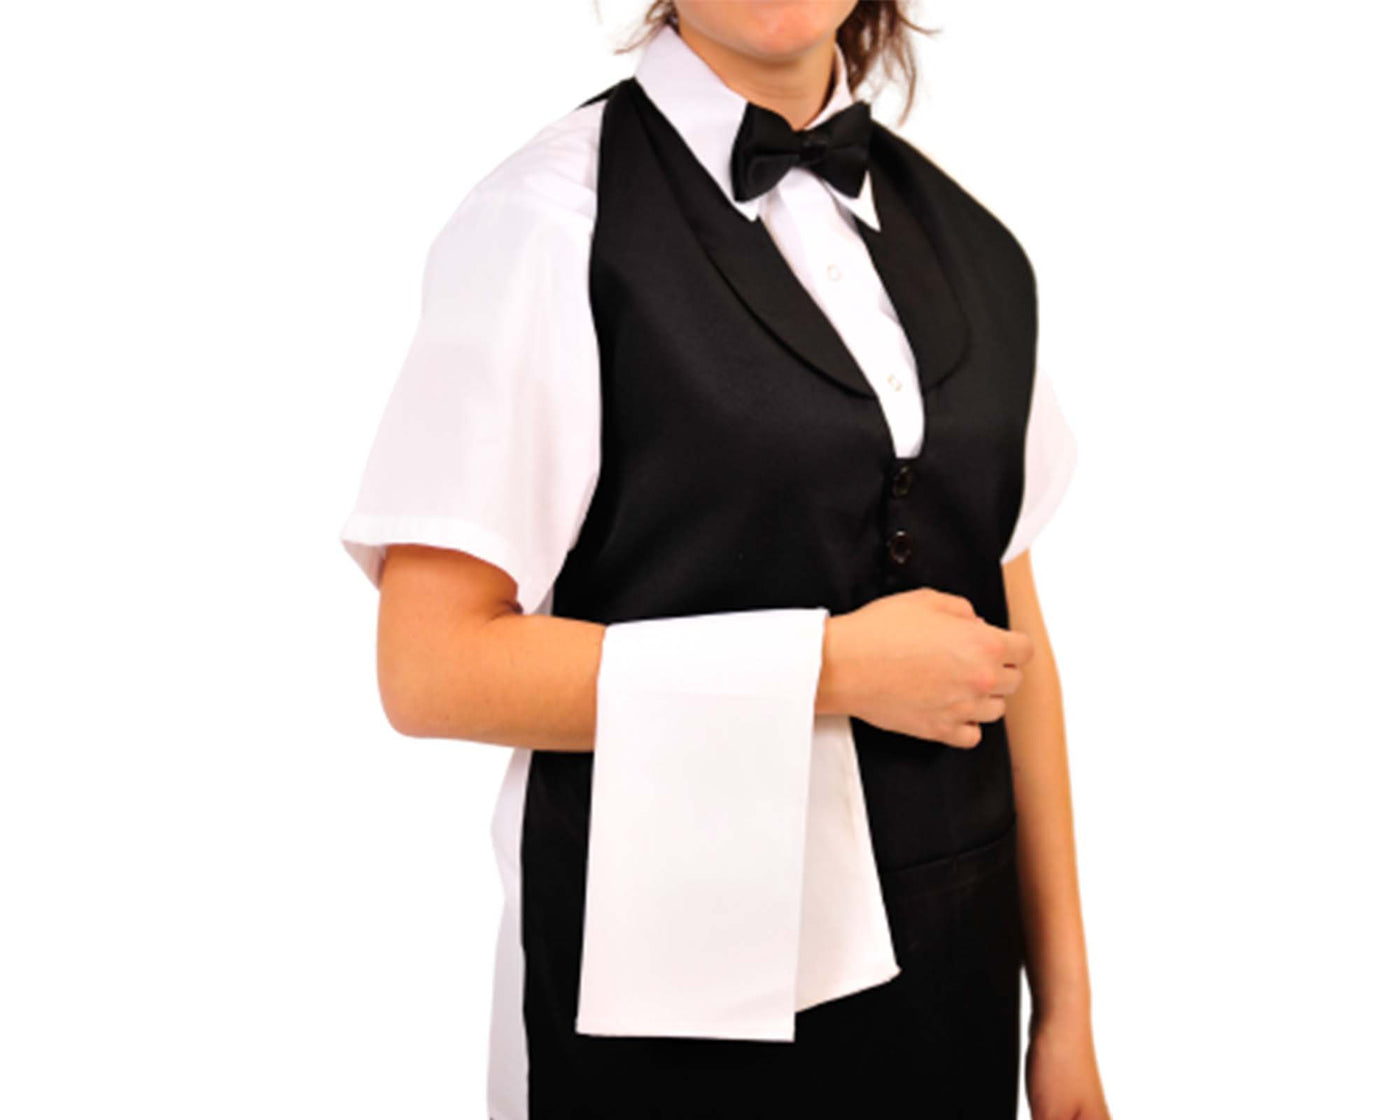 zoom image of a lady wearing black tuxedo apron with black bow tie holding white linen napkin